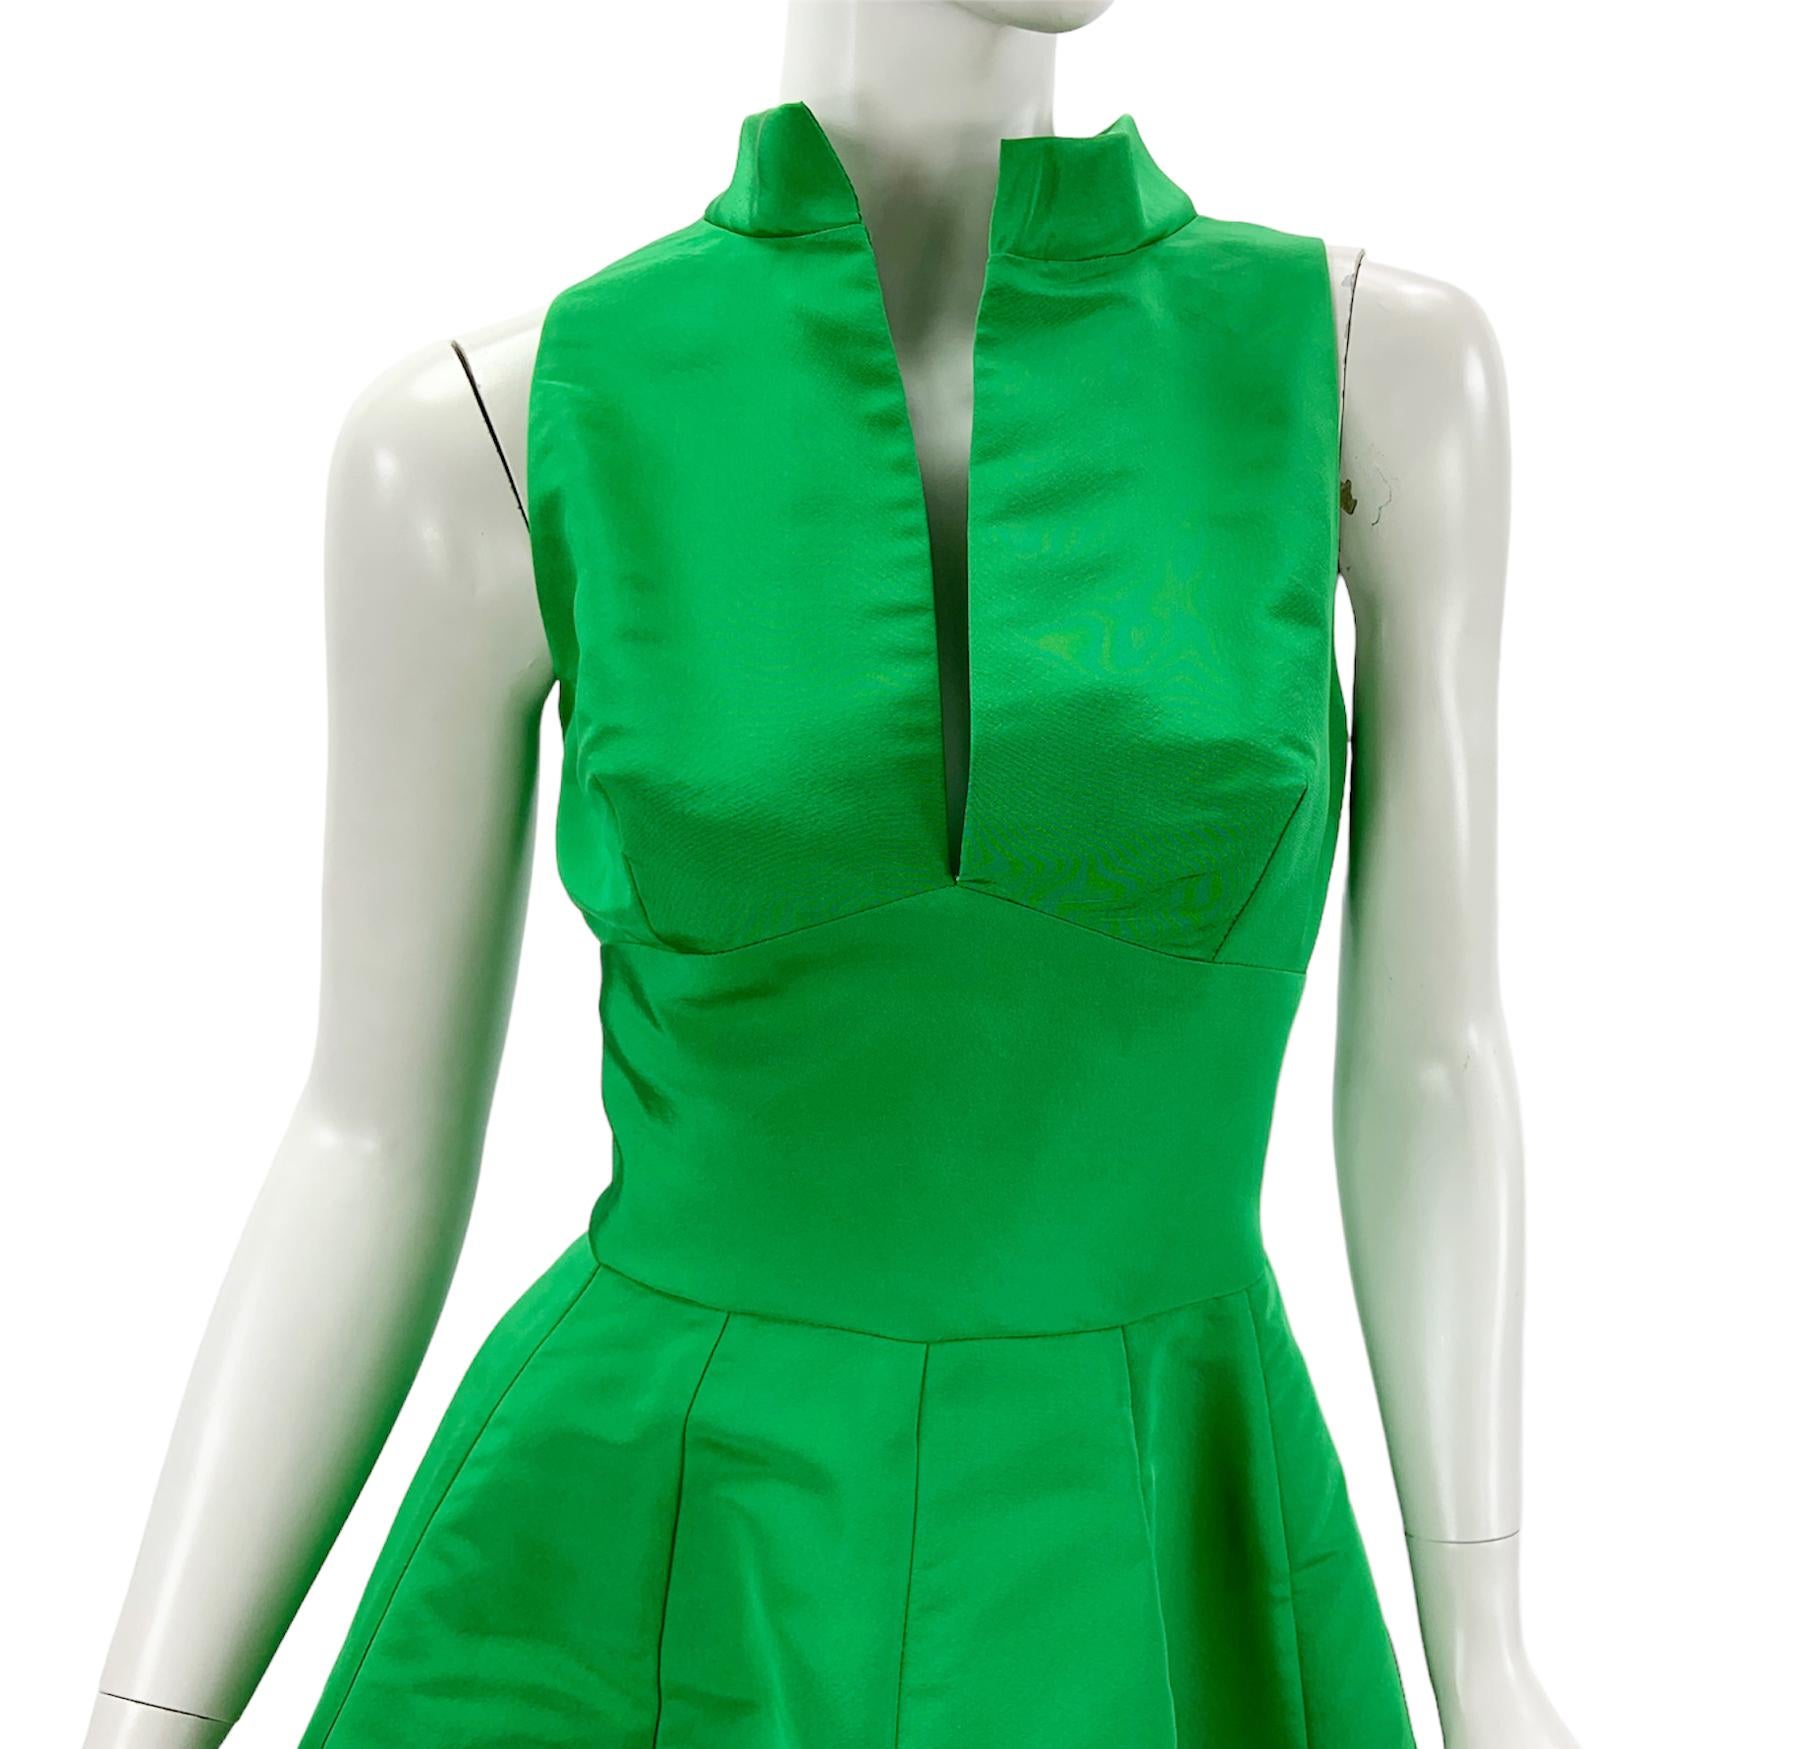 NWT Oscar de la Renta $5490 S/S 2015 Green Silk Taffeta Feather Beads Dress US 6 Pour femmes en vente